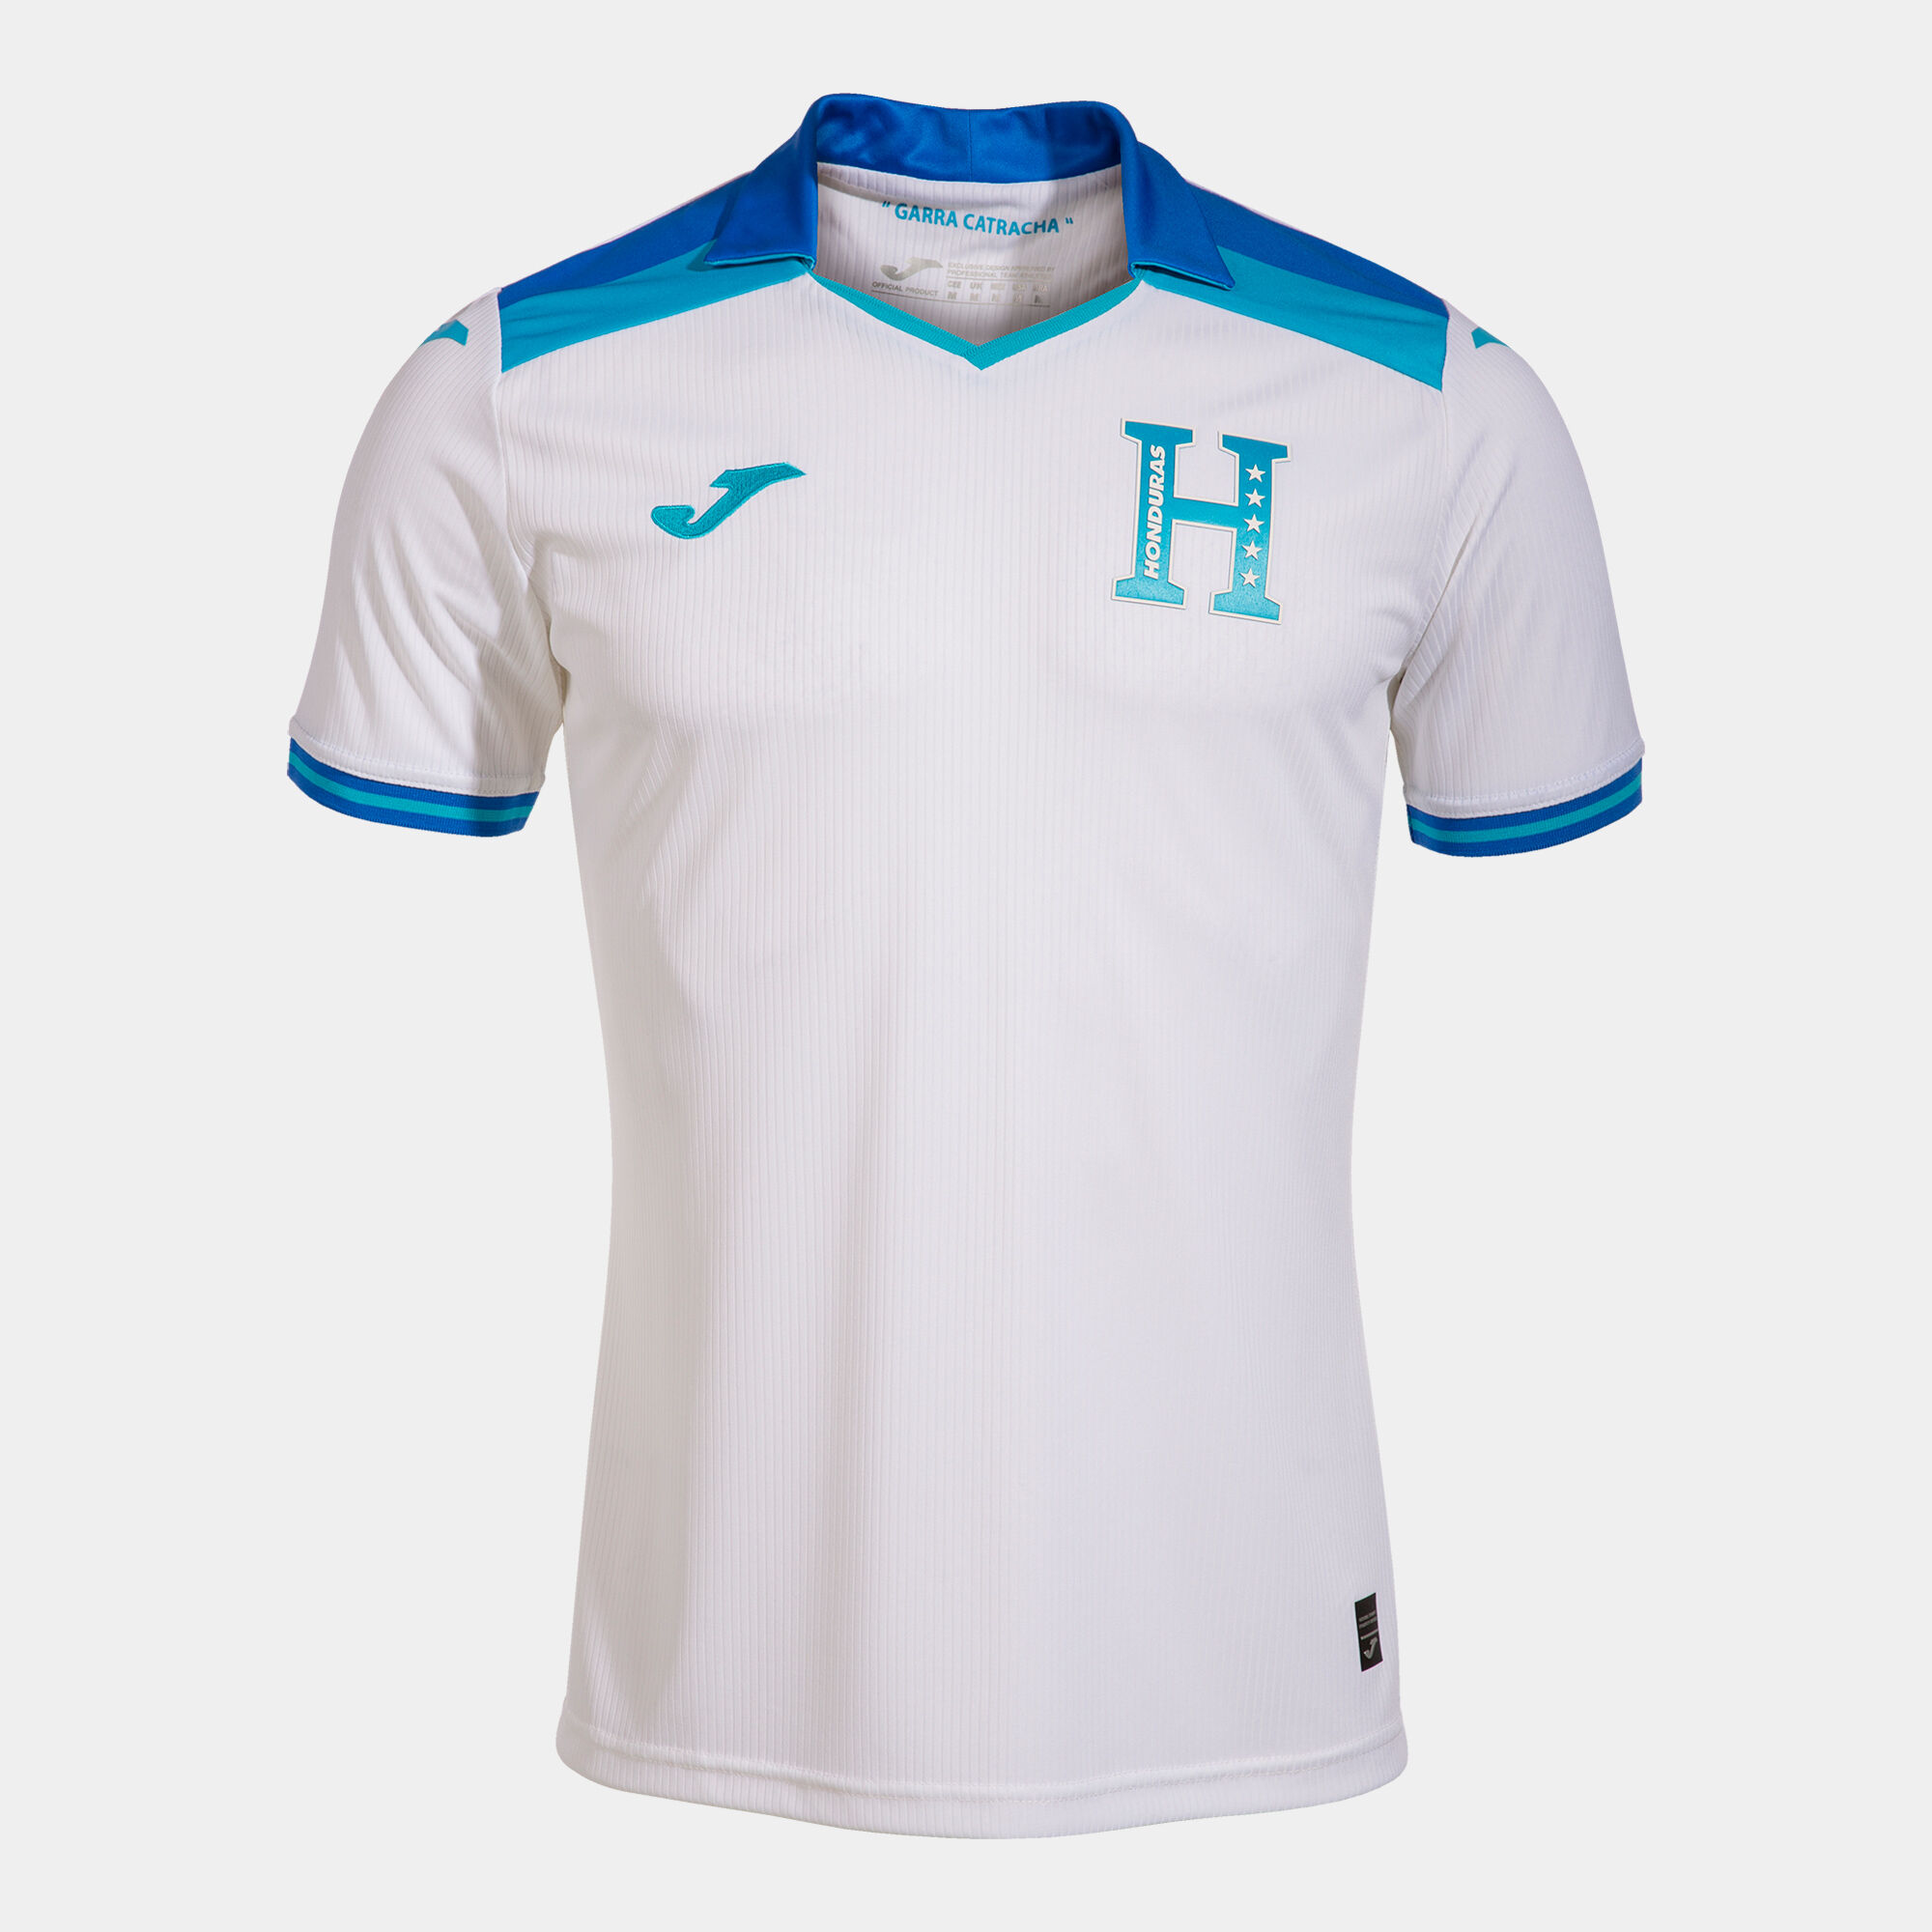 Shirt short sleeve home kit Honduras National Football Federation